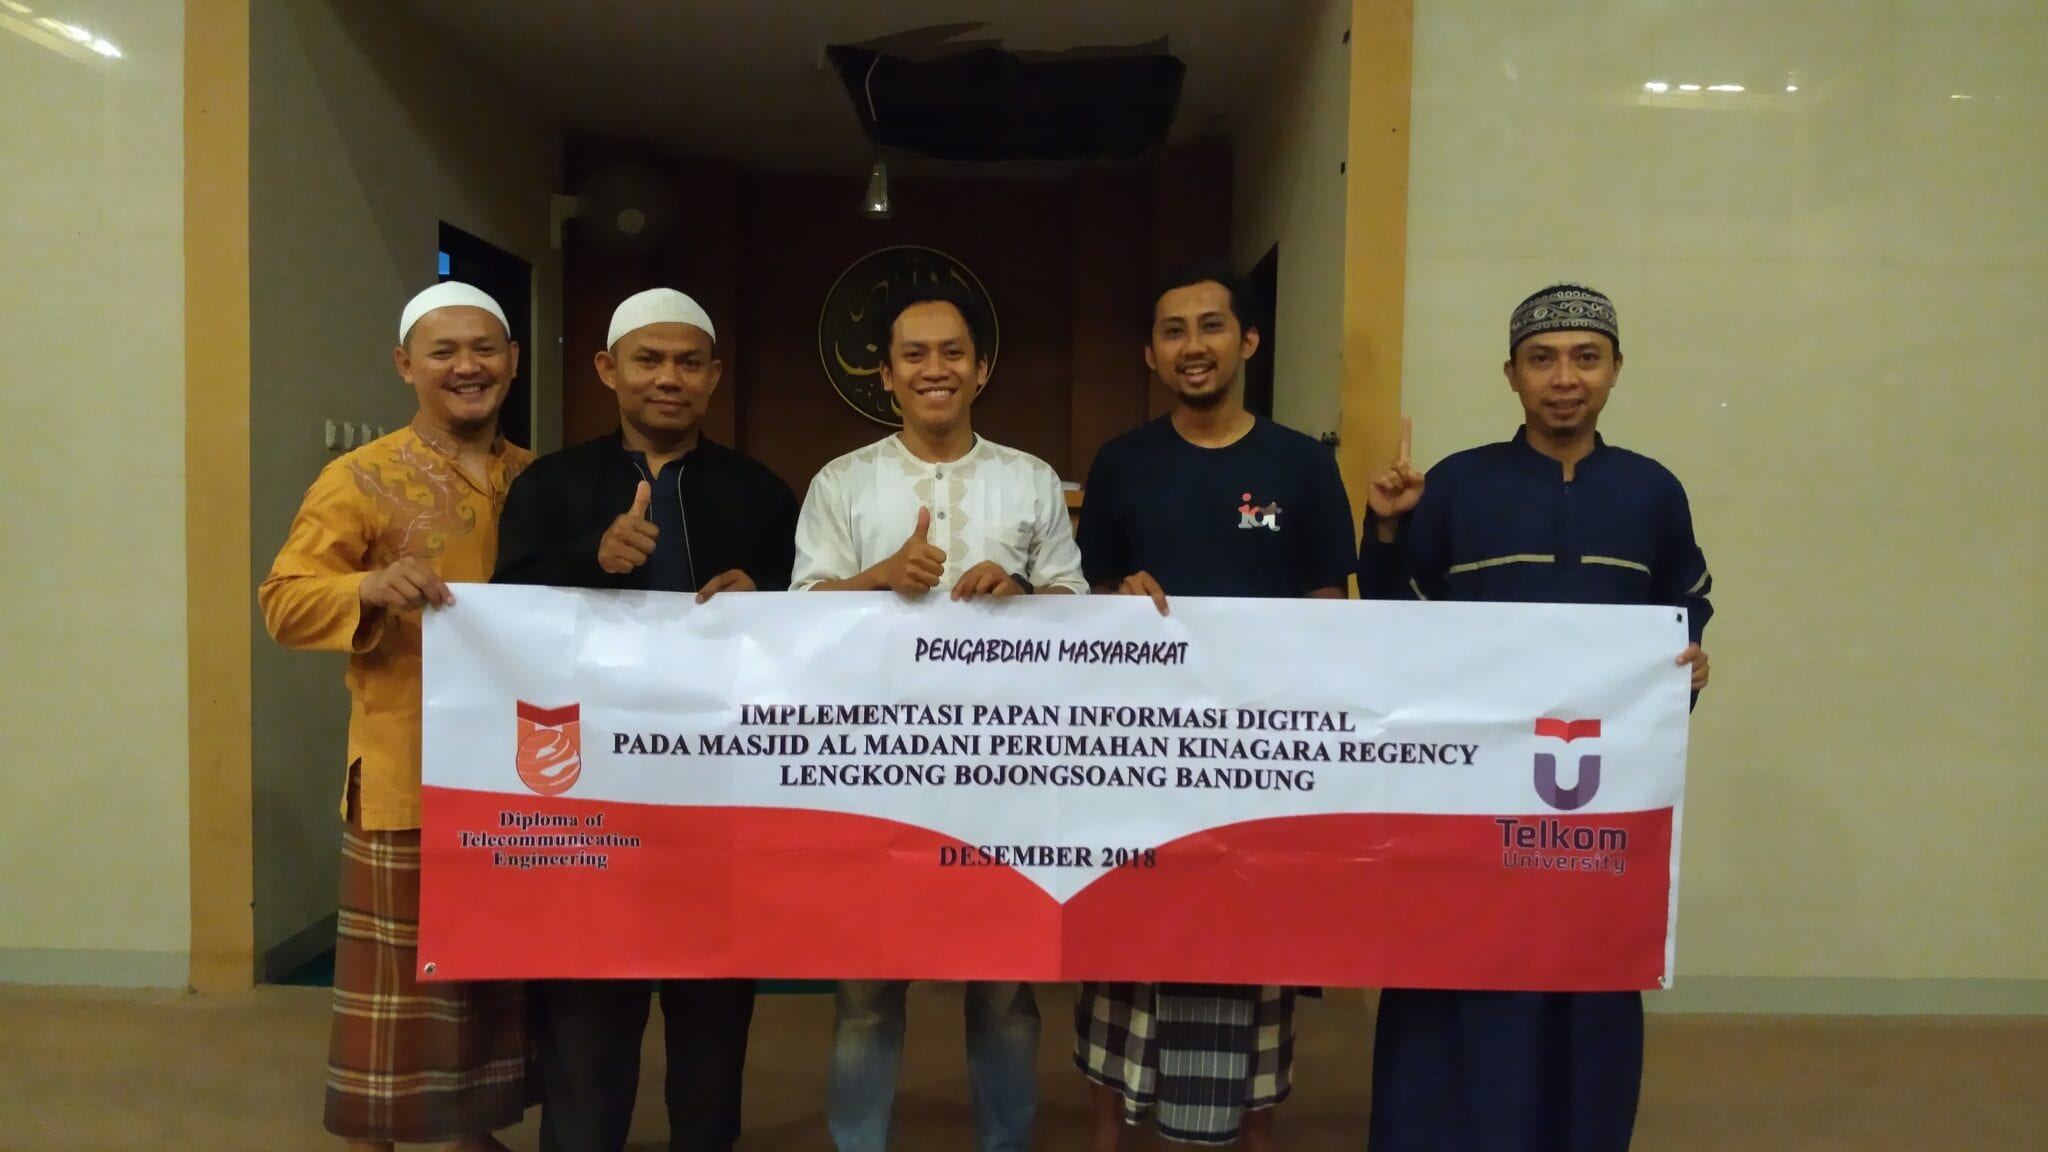 Implementasi Papan Informasi Digital Pada Masjid Al-Madani Perumahan Kinagara Regency Lengkong Bojongsoang Bandung